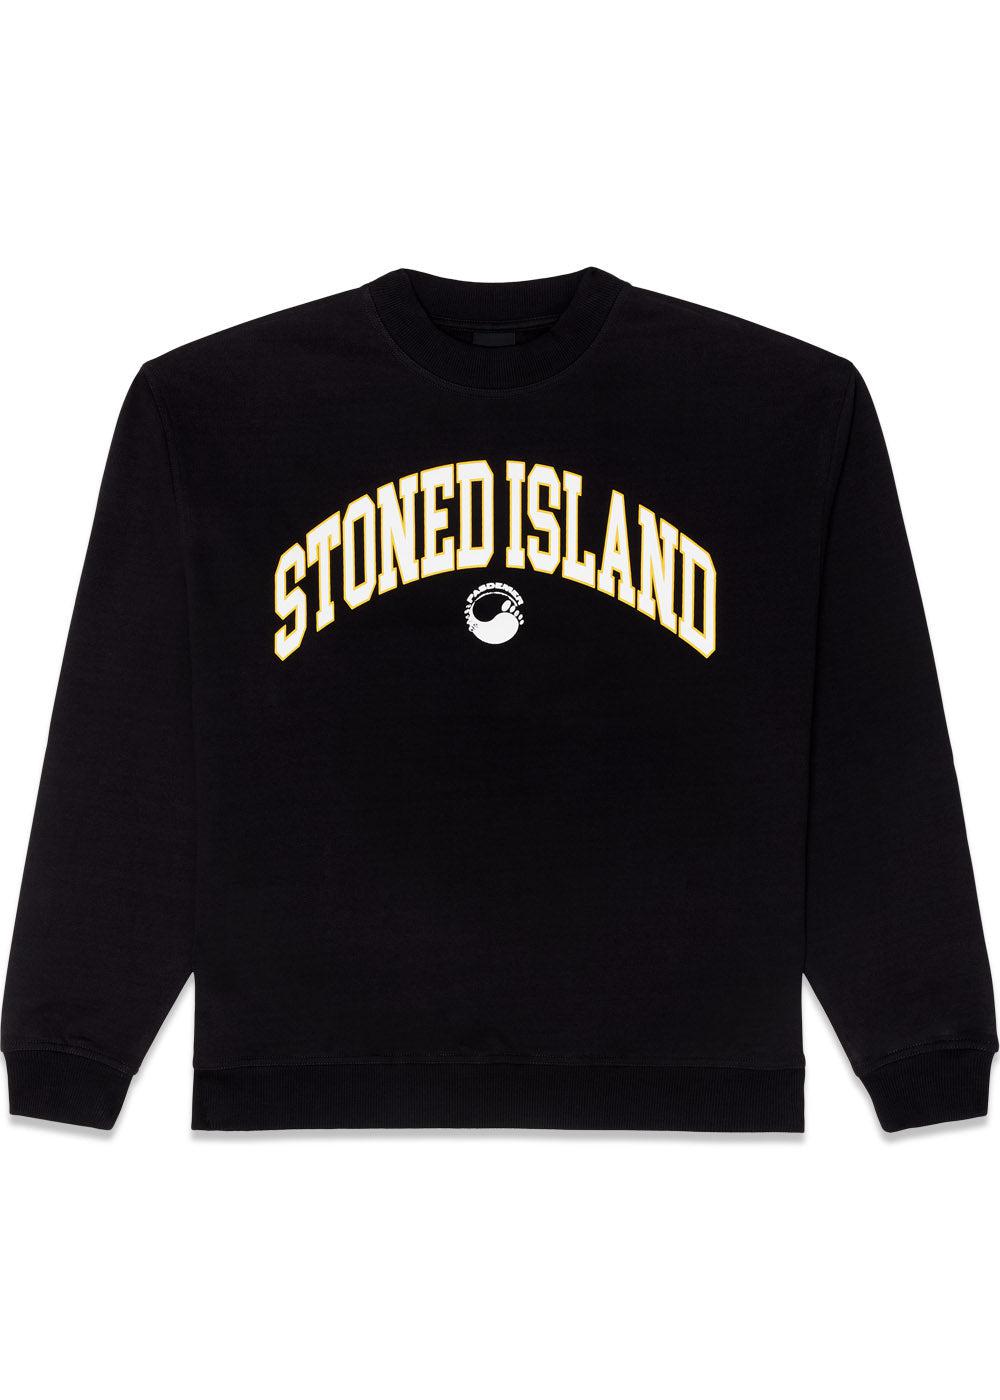 STONED ISLAND - Old Black